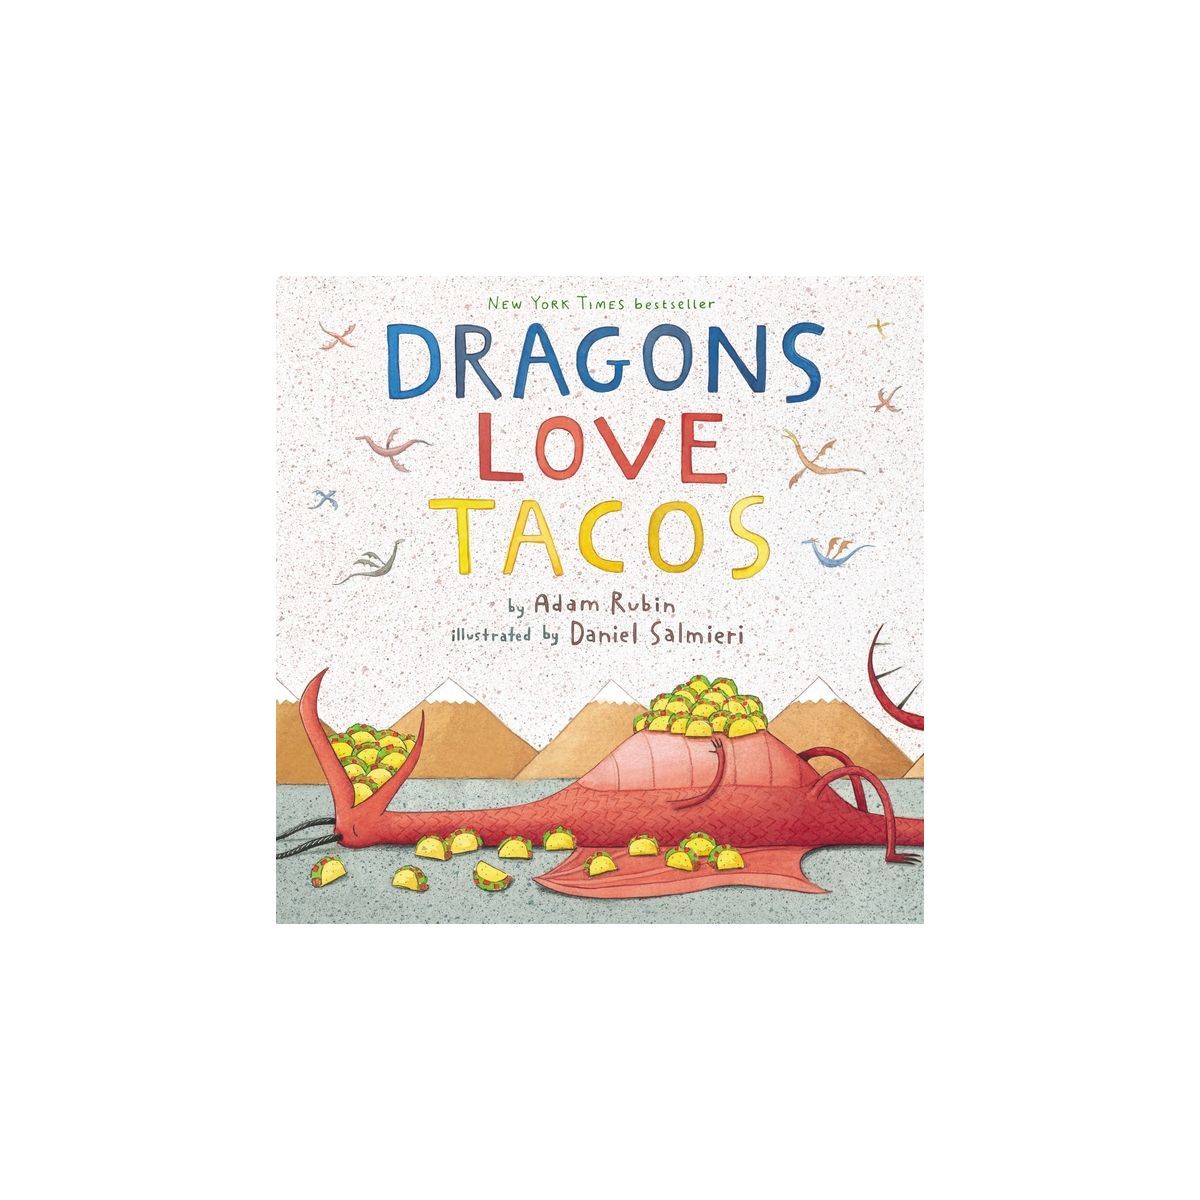 Dragons Love Tacos (Hardcover) by Adam Rubin and Daniel Salmieri | Target